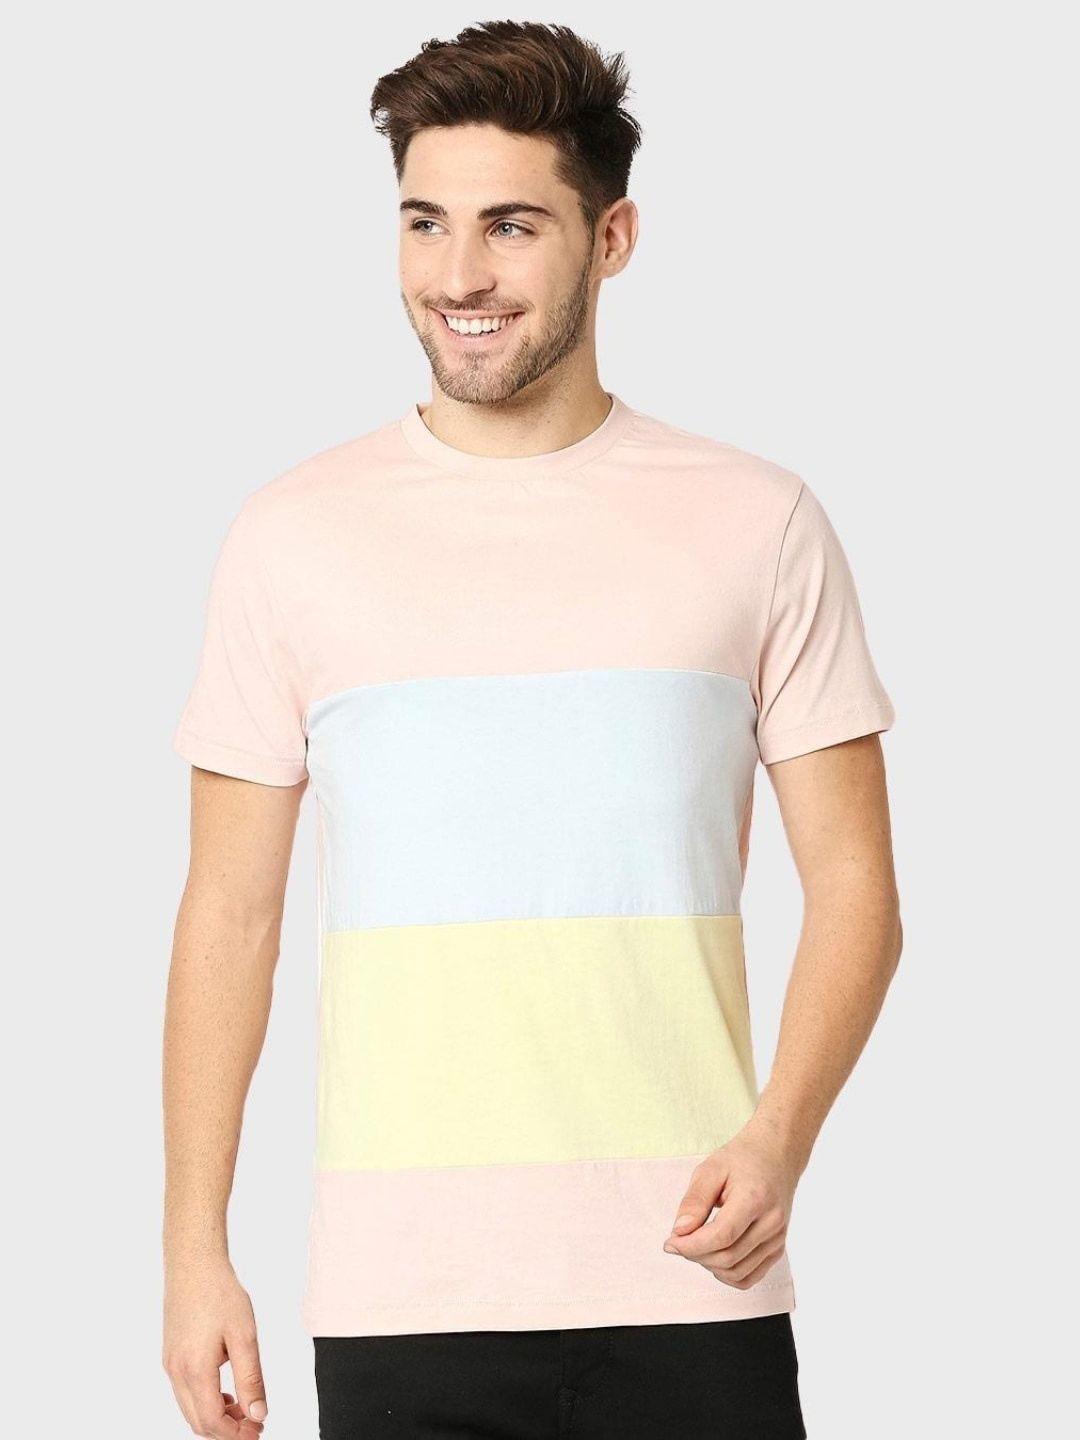 bewakoof colourblocked cotton t-shirt